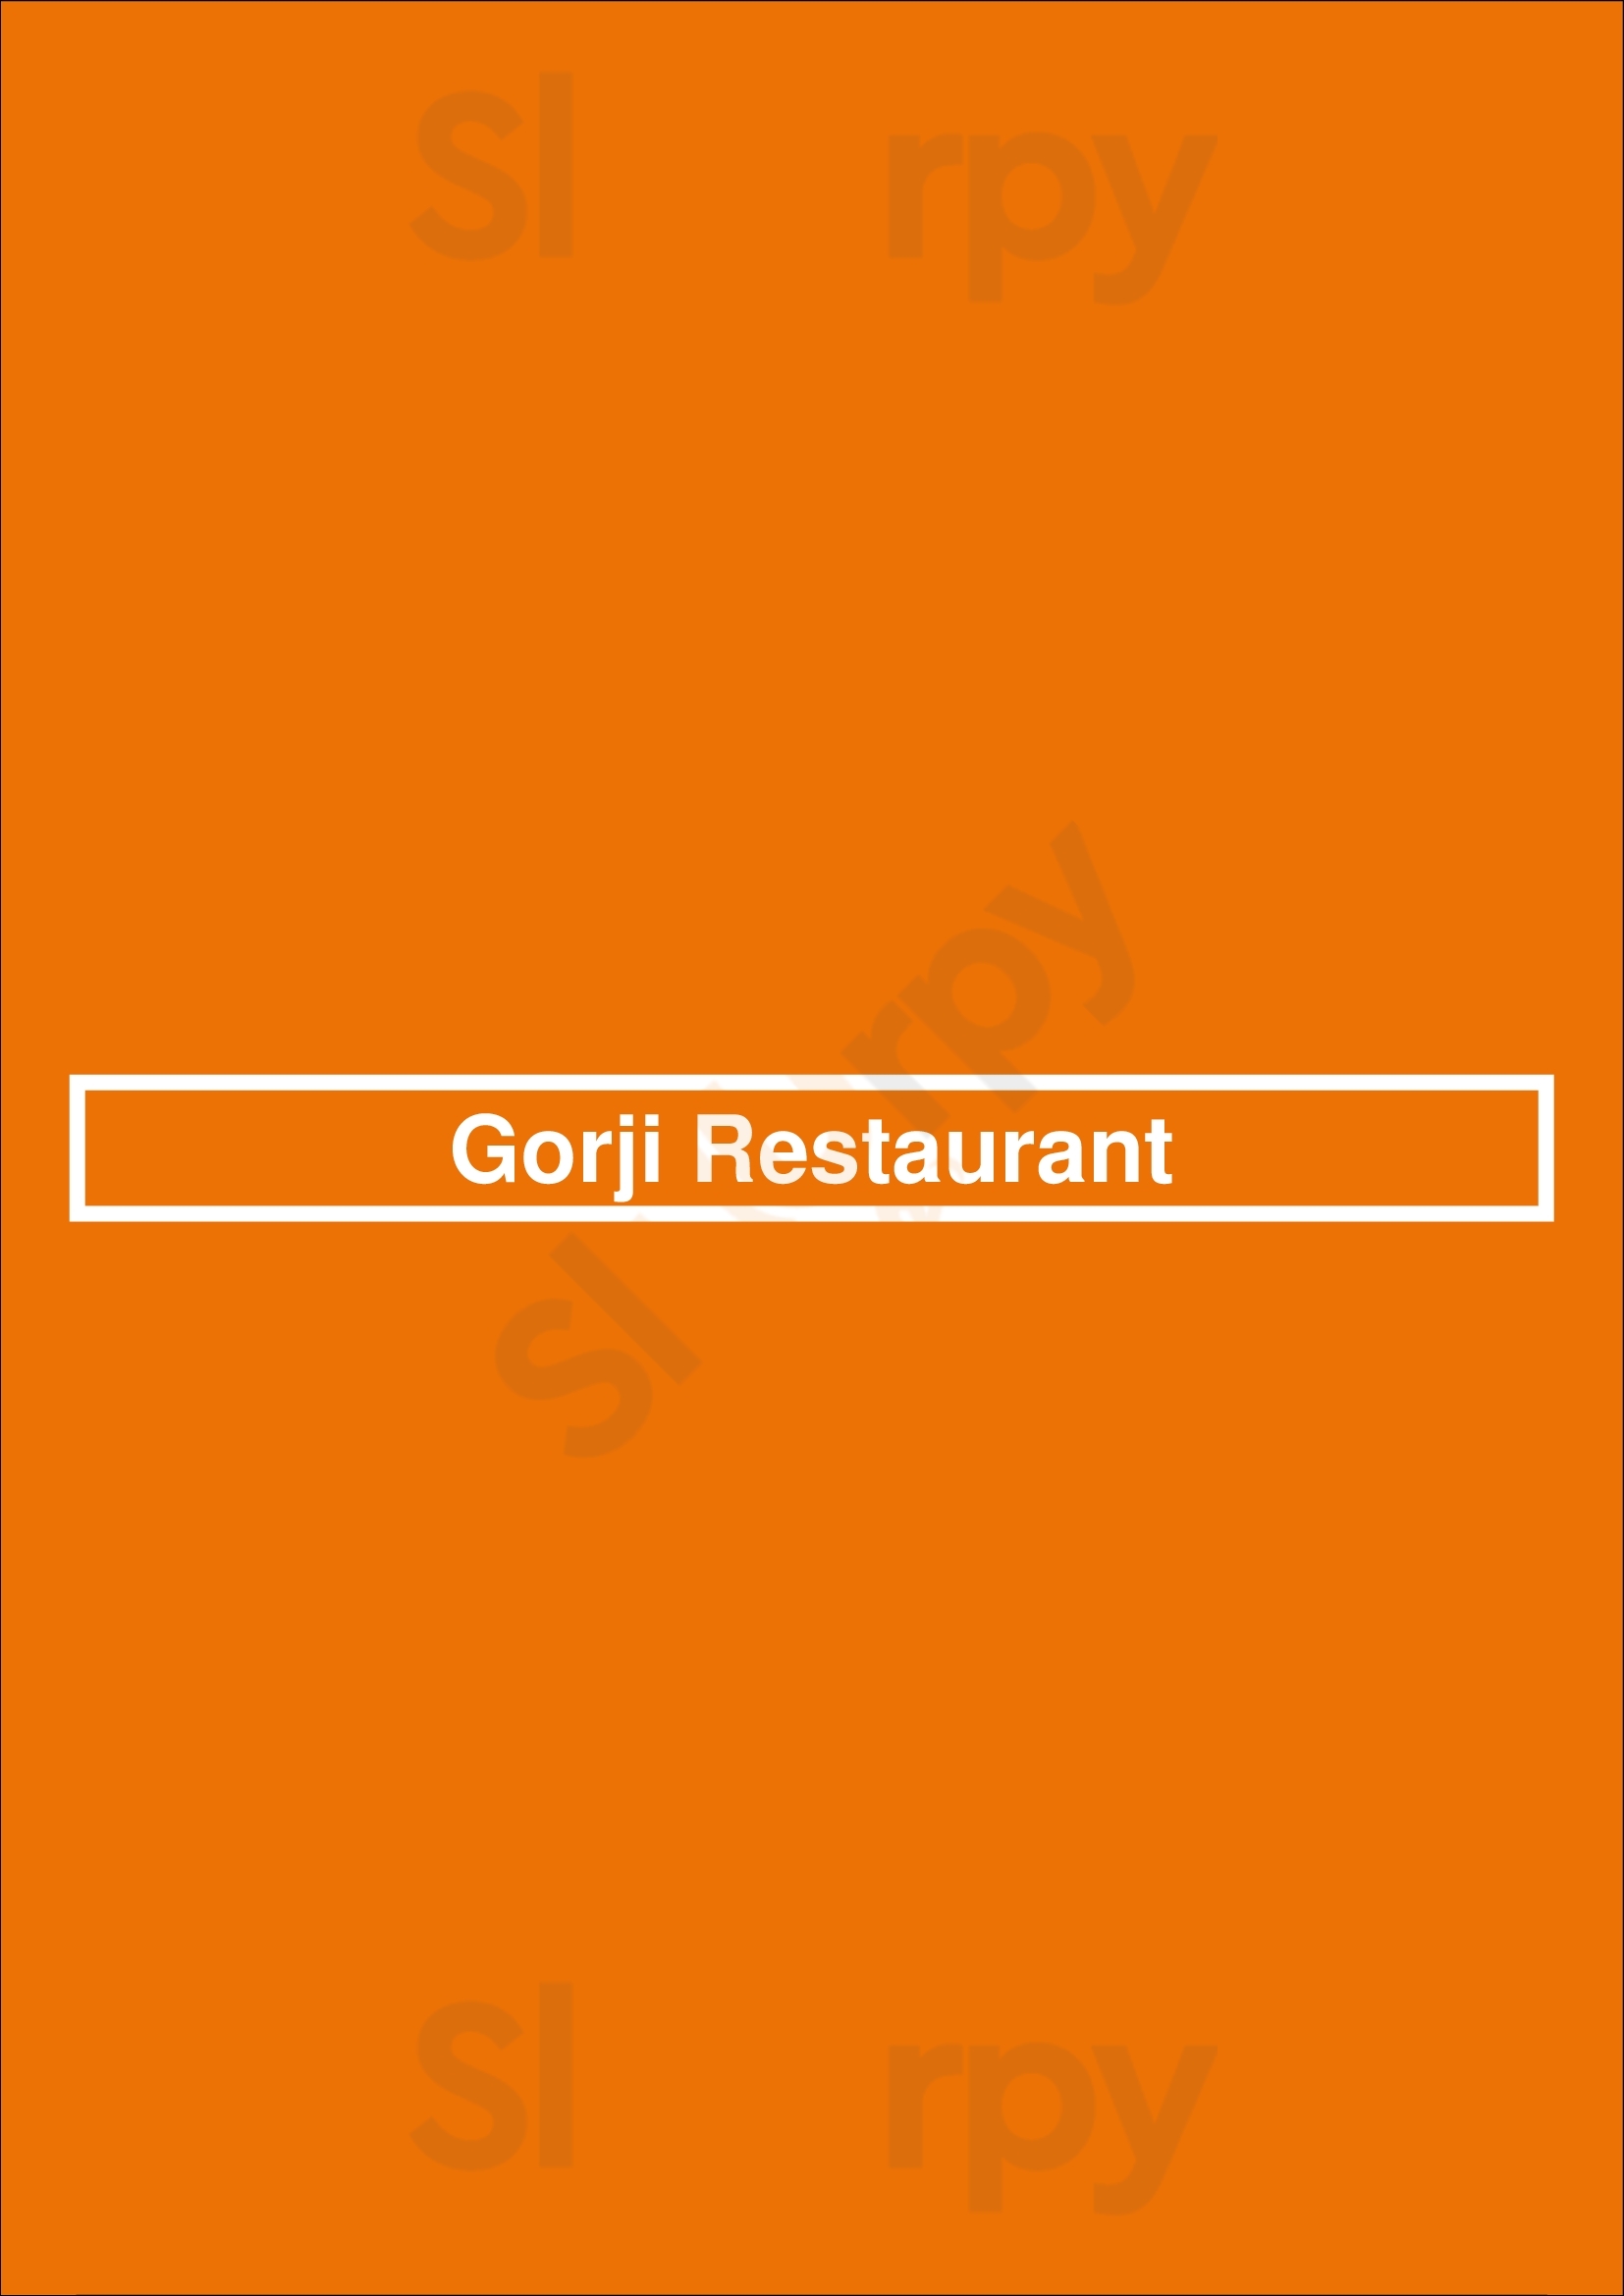 Gorji Restaurant Dallas Menu - 1